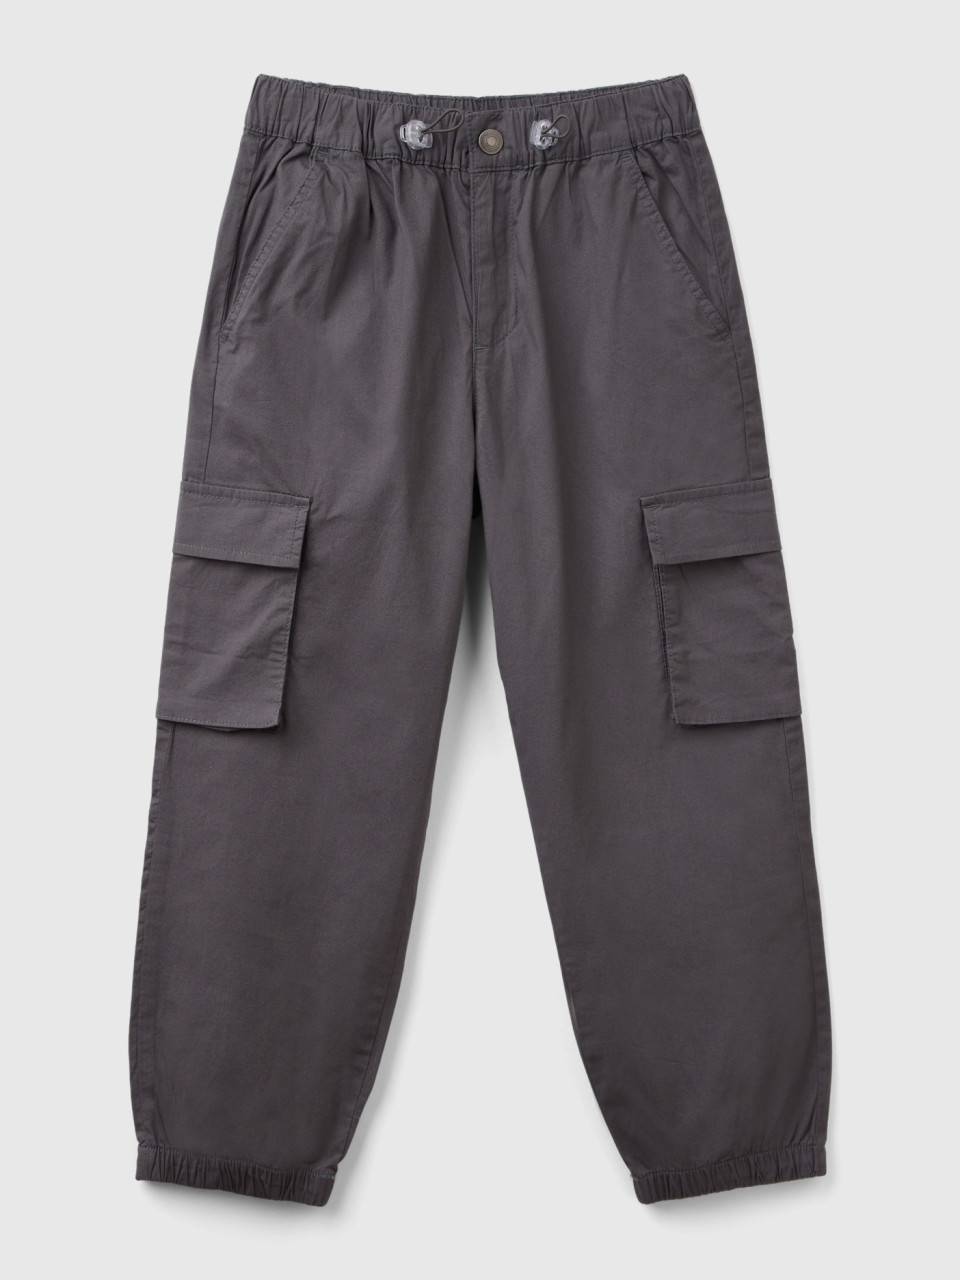 Benetton, Stretch Cotton Parachute Trousers, Dark Gray, Kids